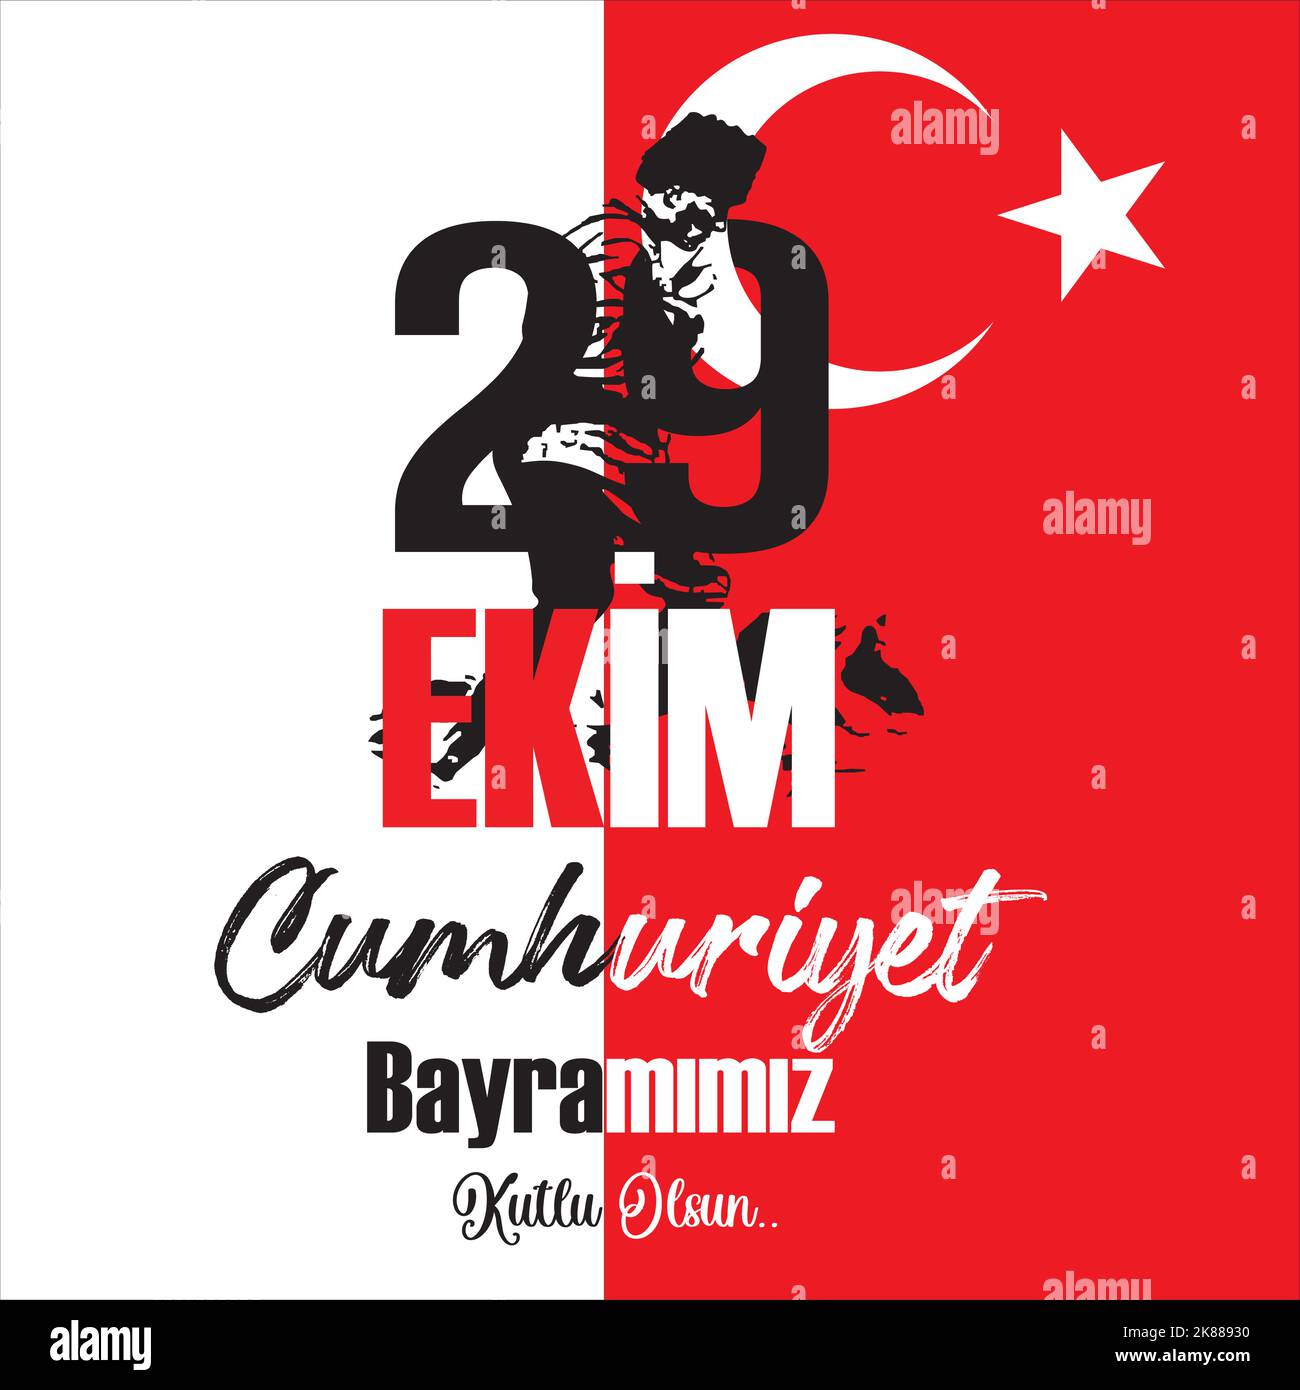 Turkish National Festival. 29 Ekim Cumhuriyet Bayrami. Translation: Happy October 29th Republic Day. National Day in Turkey. Stock Vector